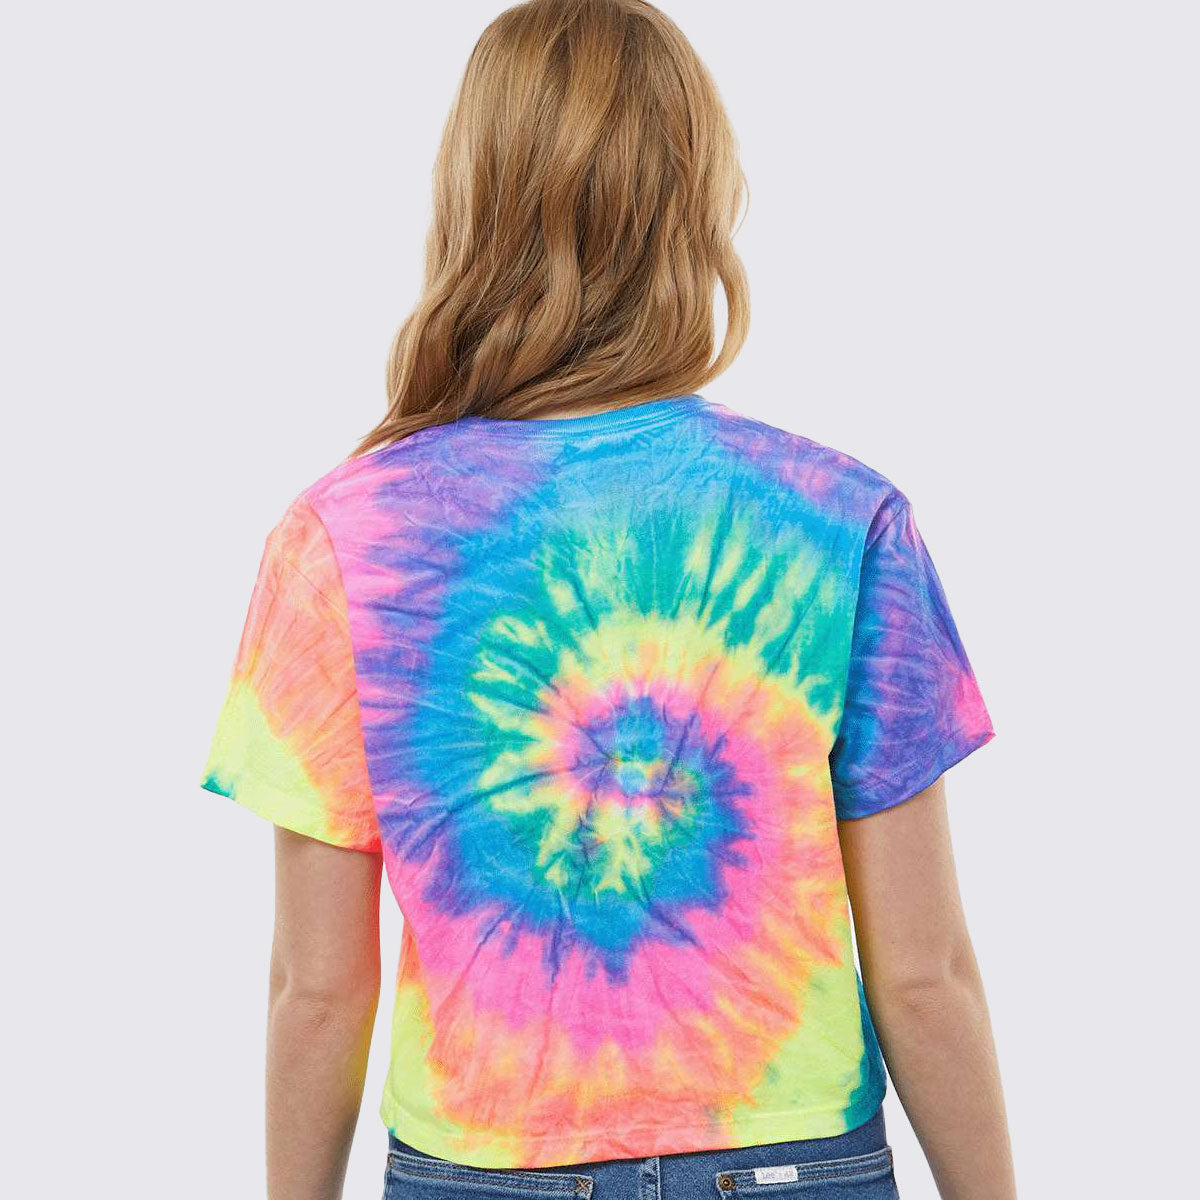 Girls Who Eat Women’s Tie-Dyed Crop T-Shirt